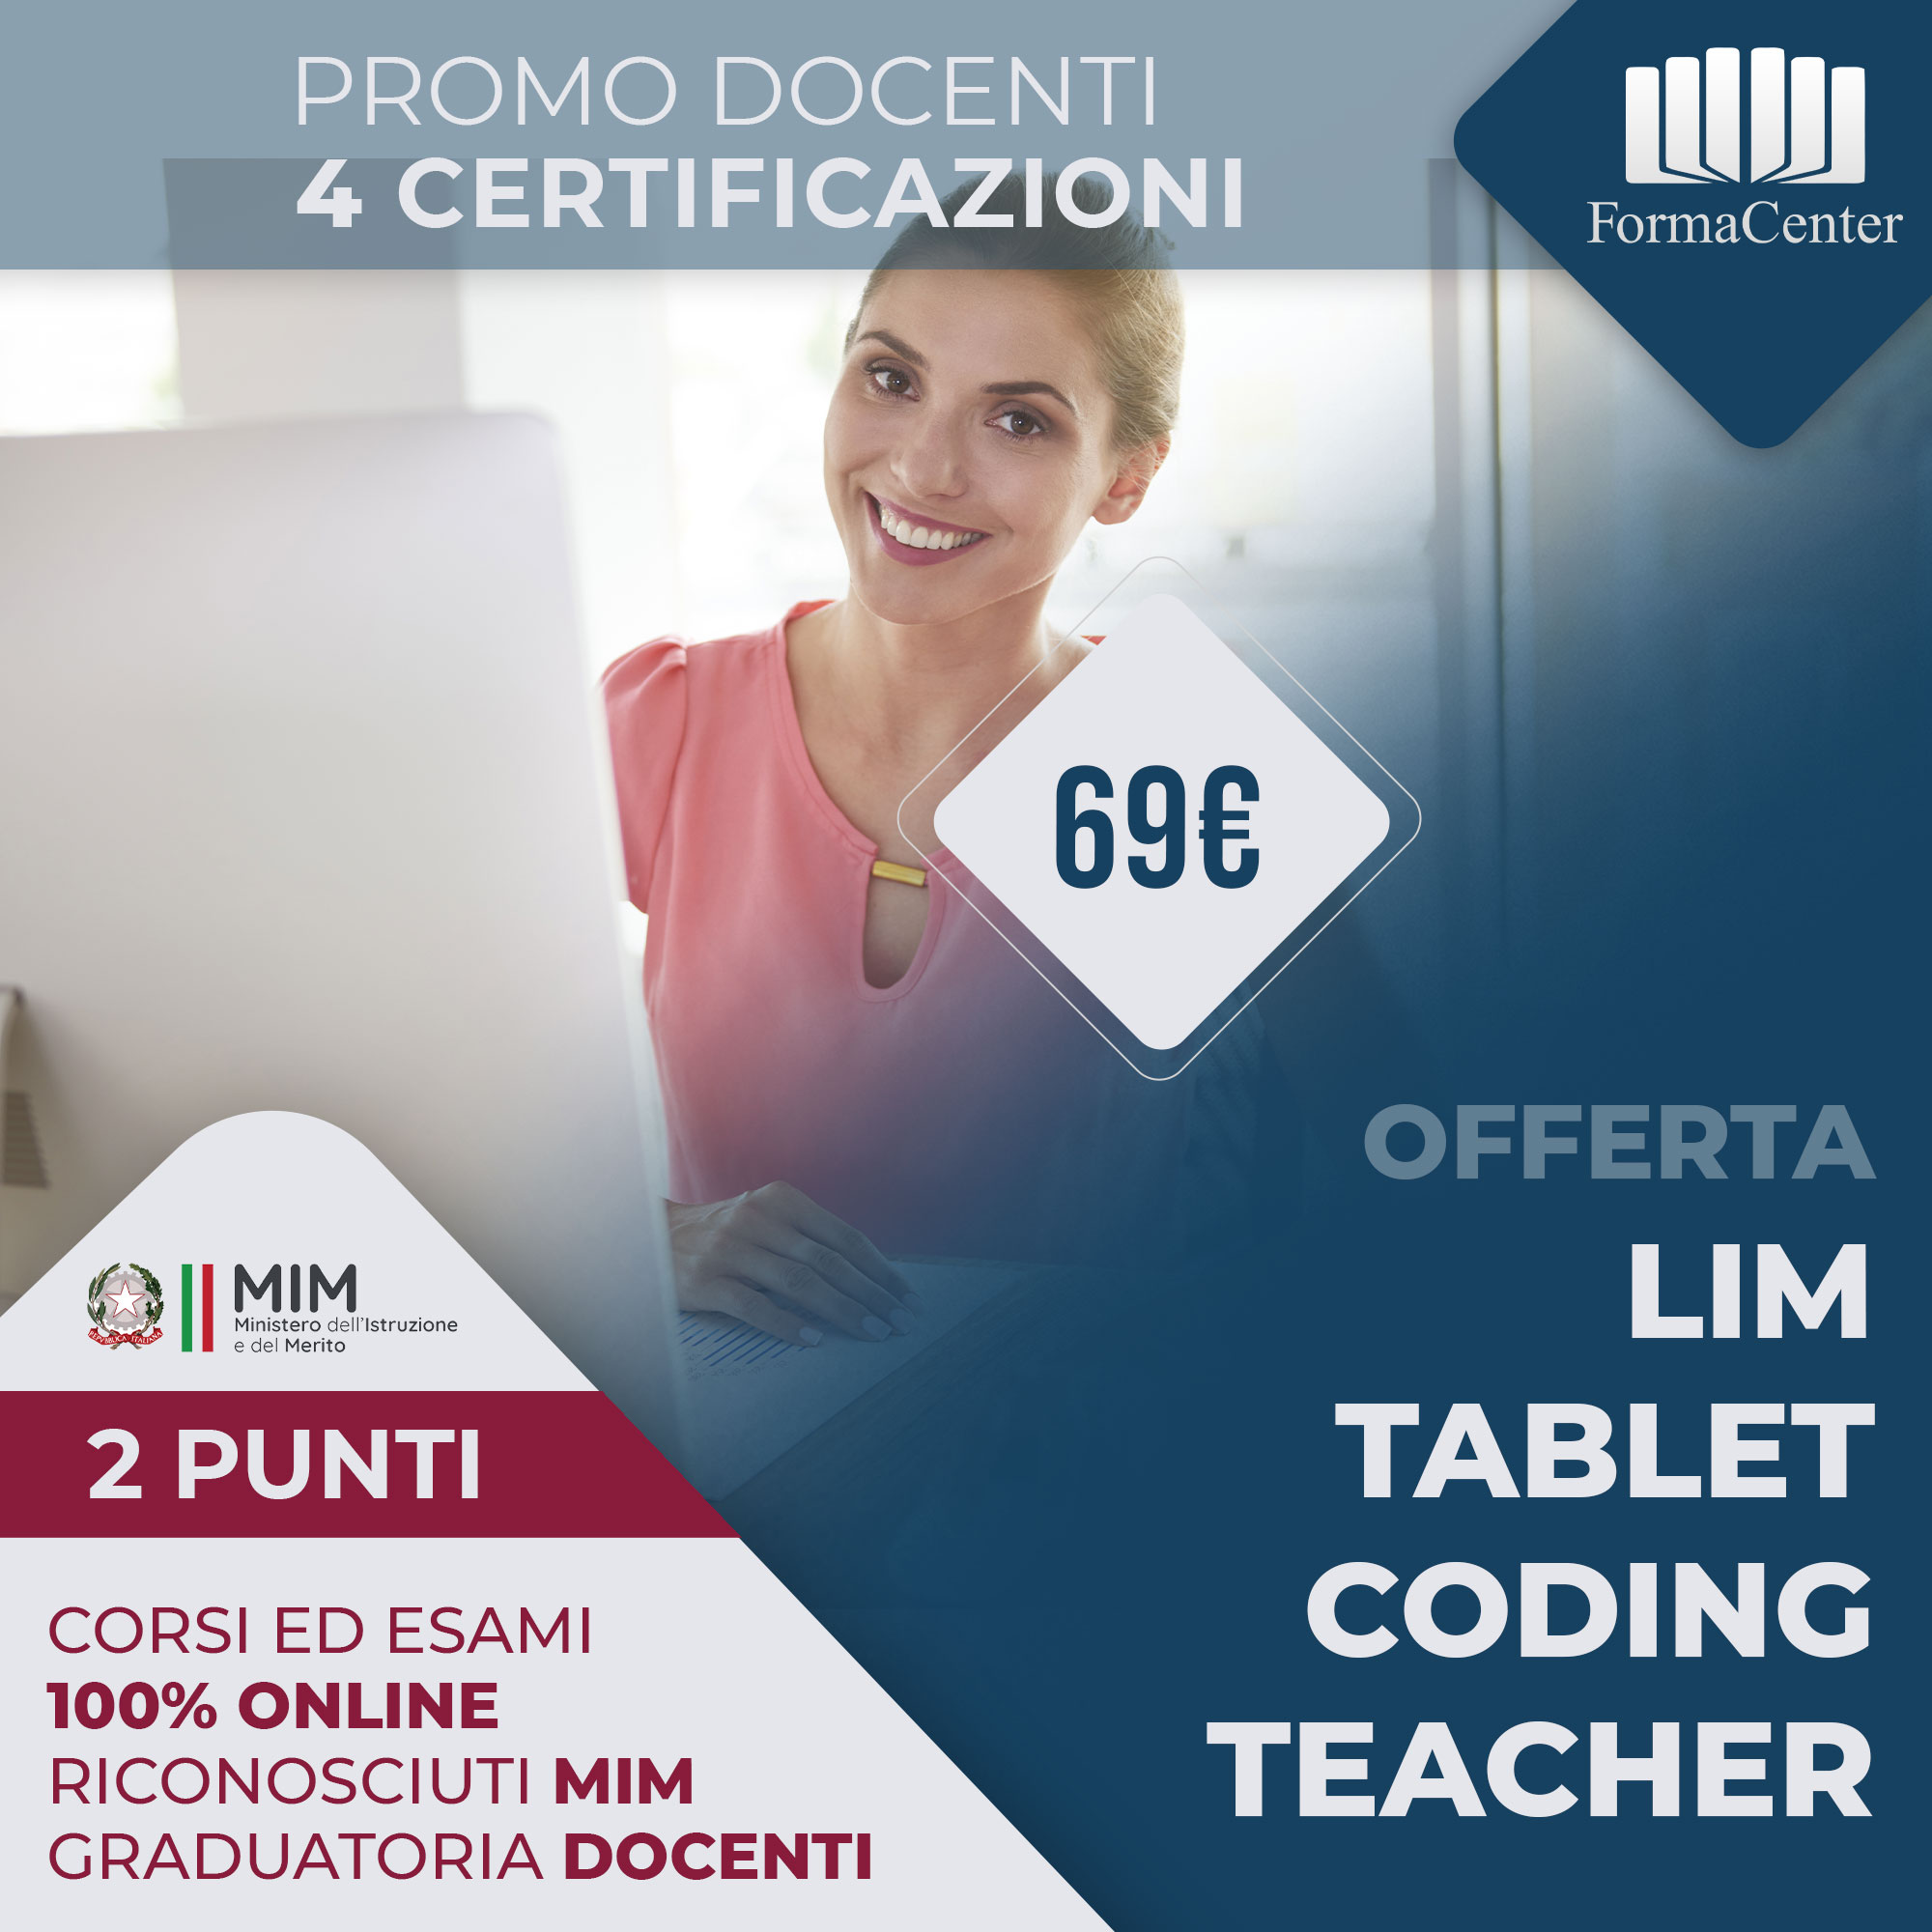 PROMO: LIM + TABLET + CODING + TEACHER